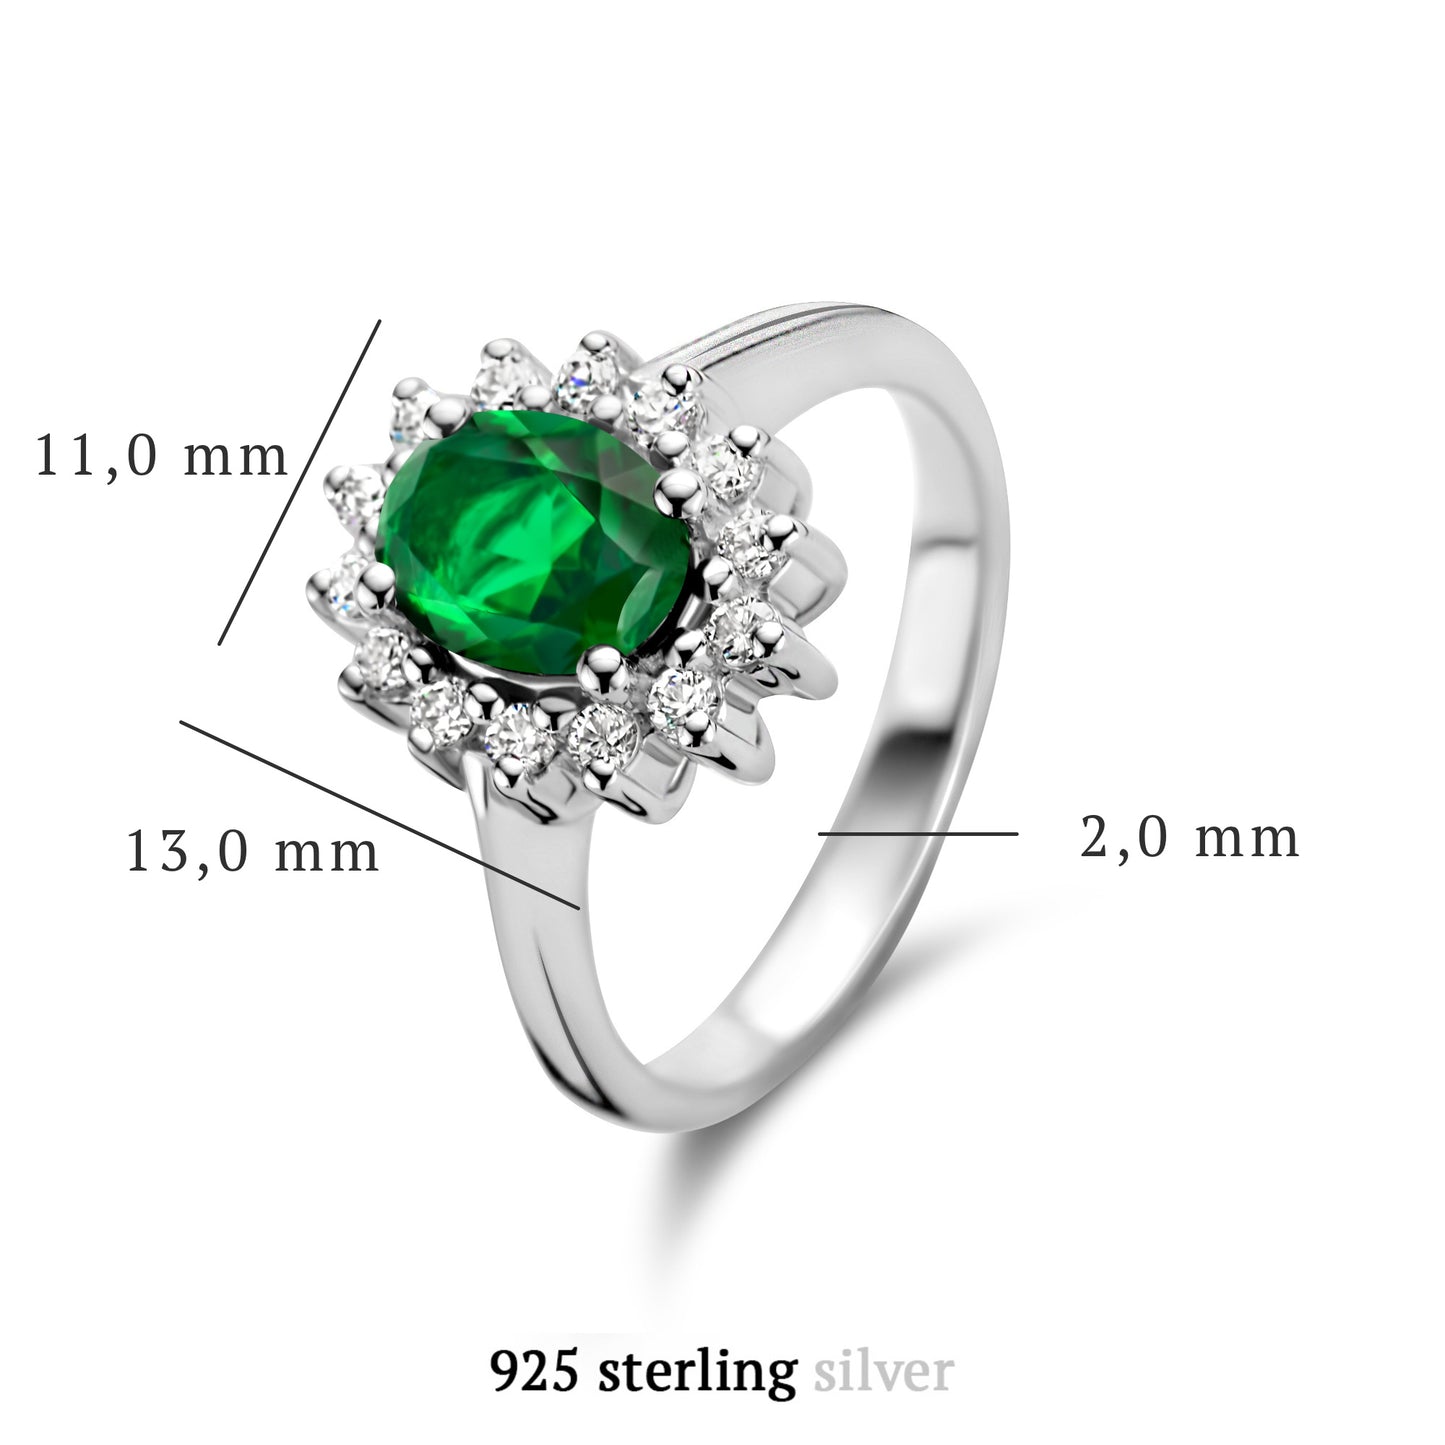 Mia Colore Verdi 925 sterling sølv ring med grøn zirconia sten